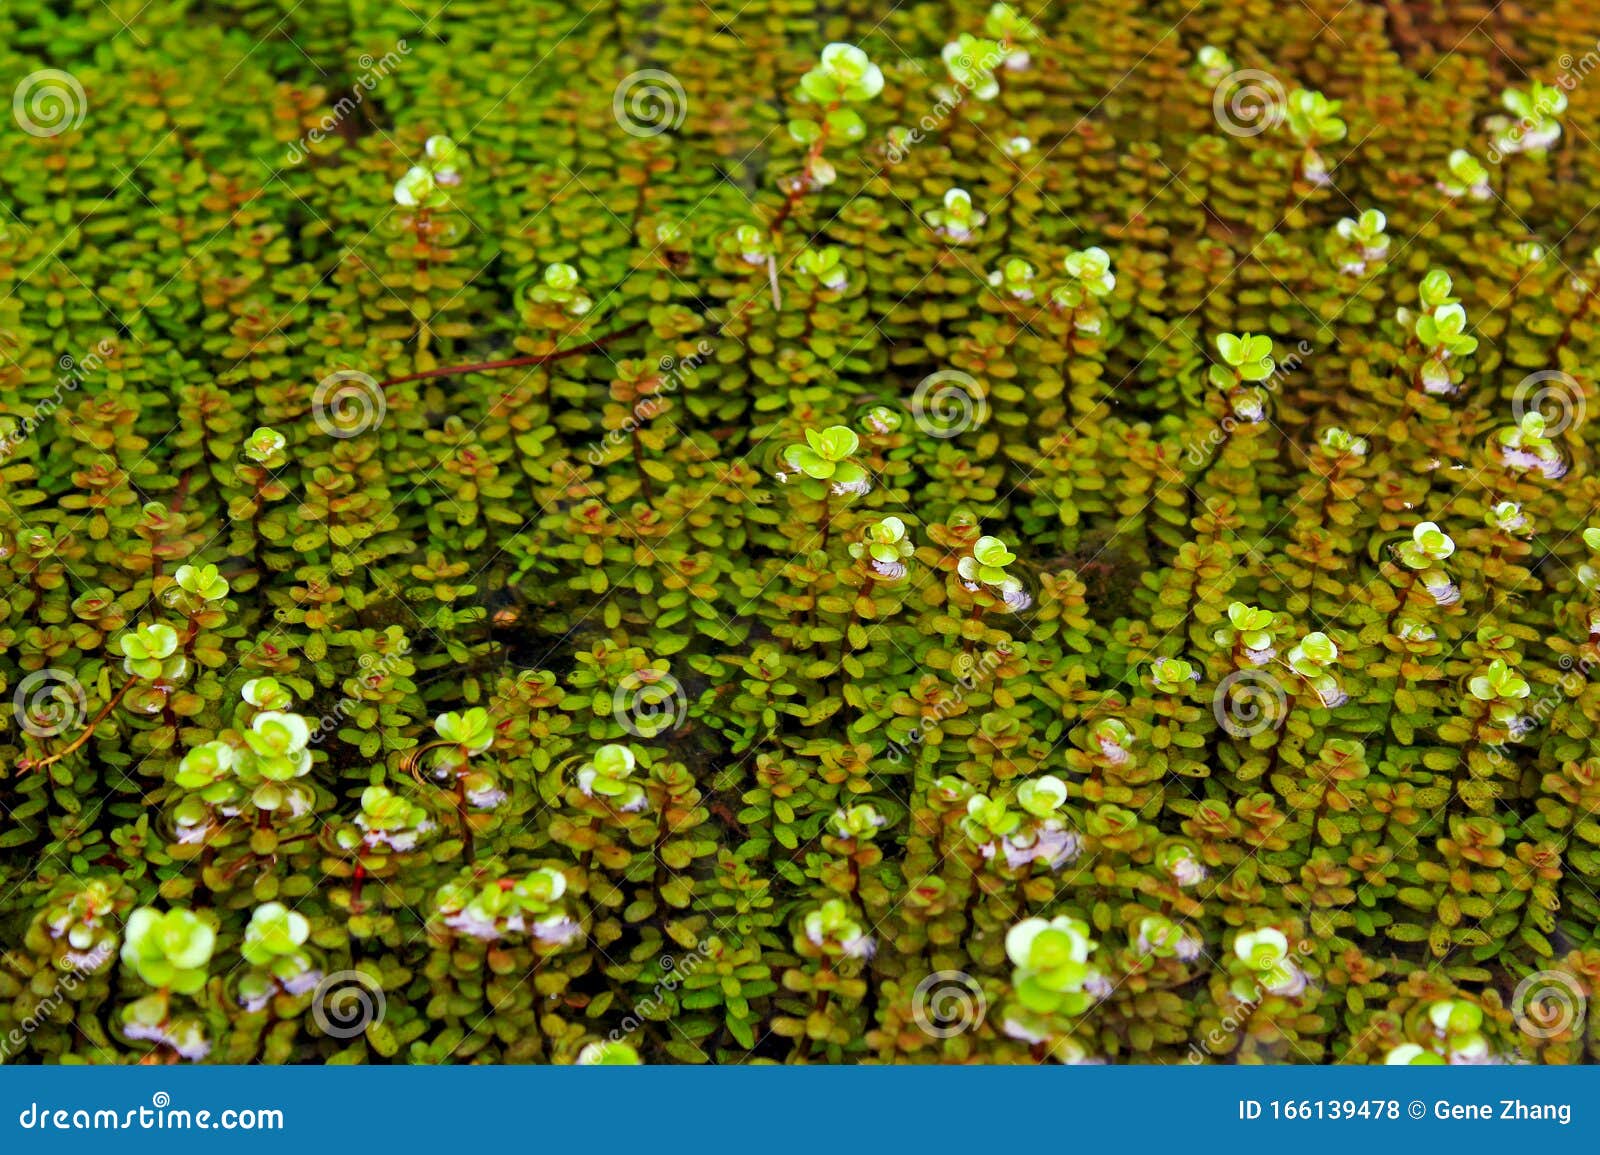 rotala rotundifolia, die zwergrotala stockfoto - bild von handel